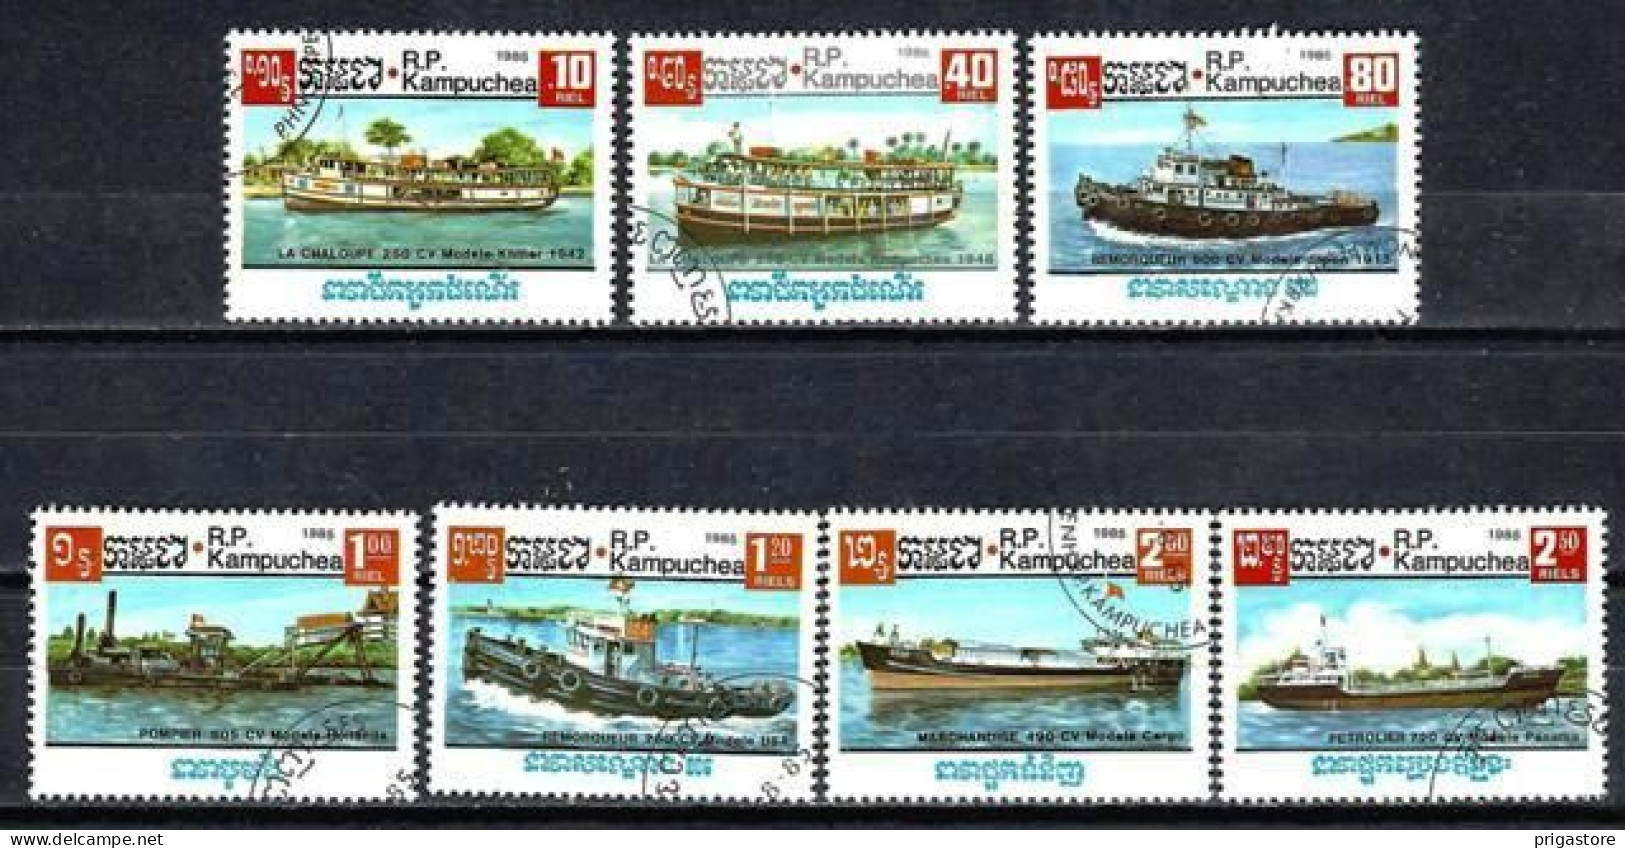 Kampuchea 1985 Bateaux (114) Yvert N° 583 à 589 Oblitérés Used - Kampuchea